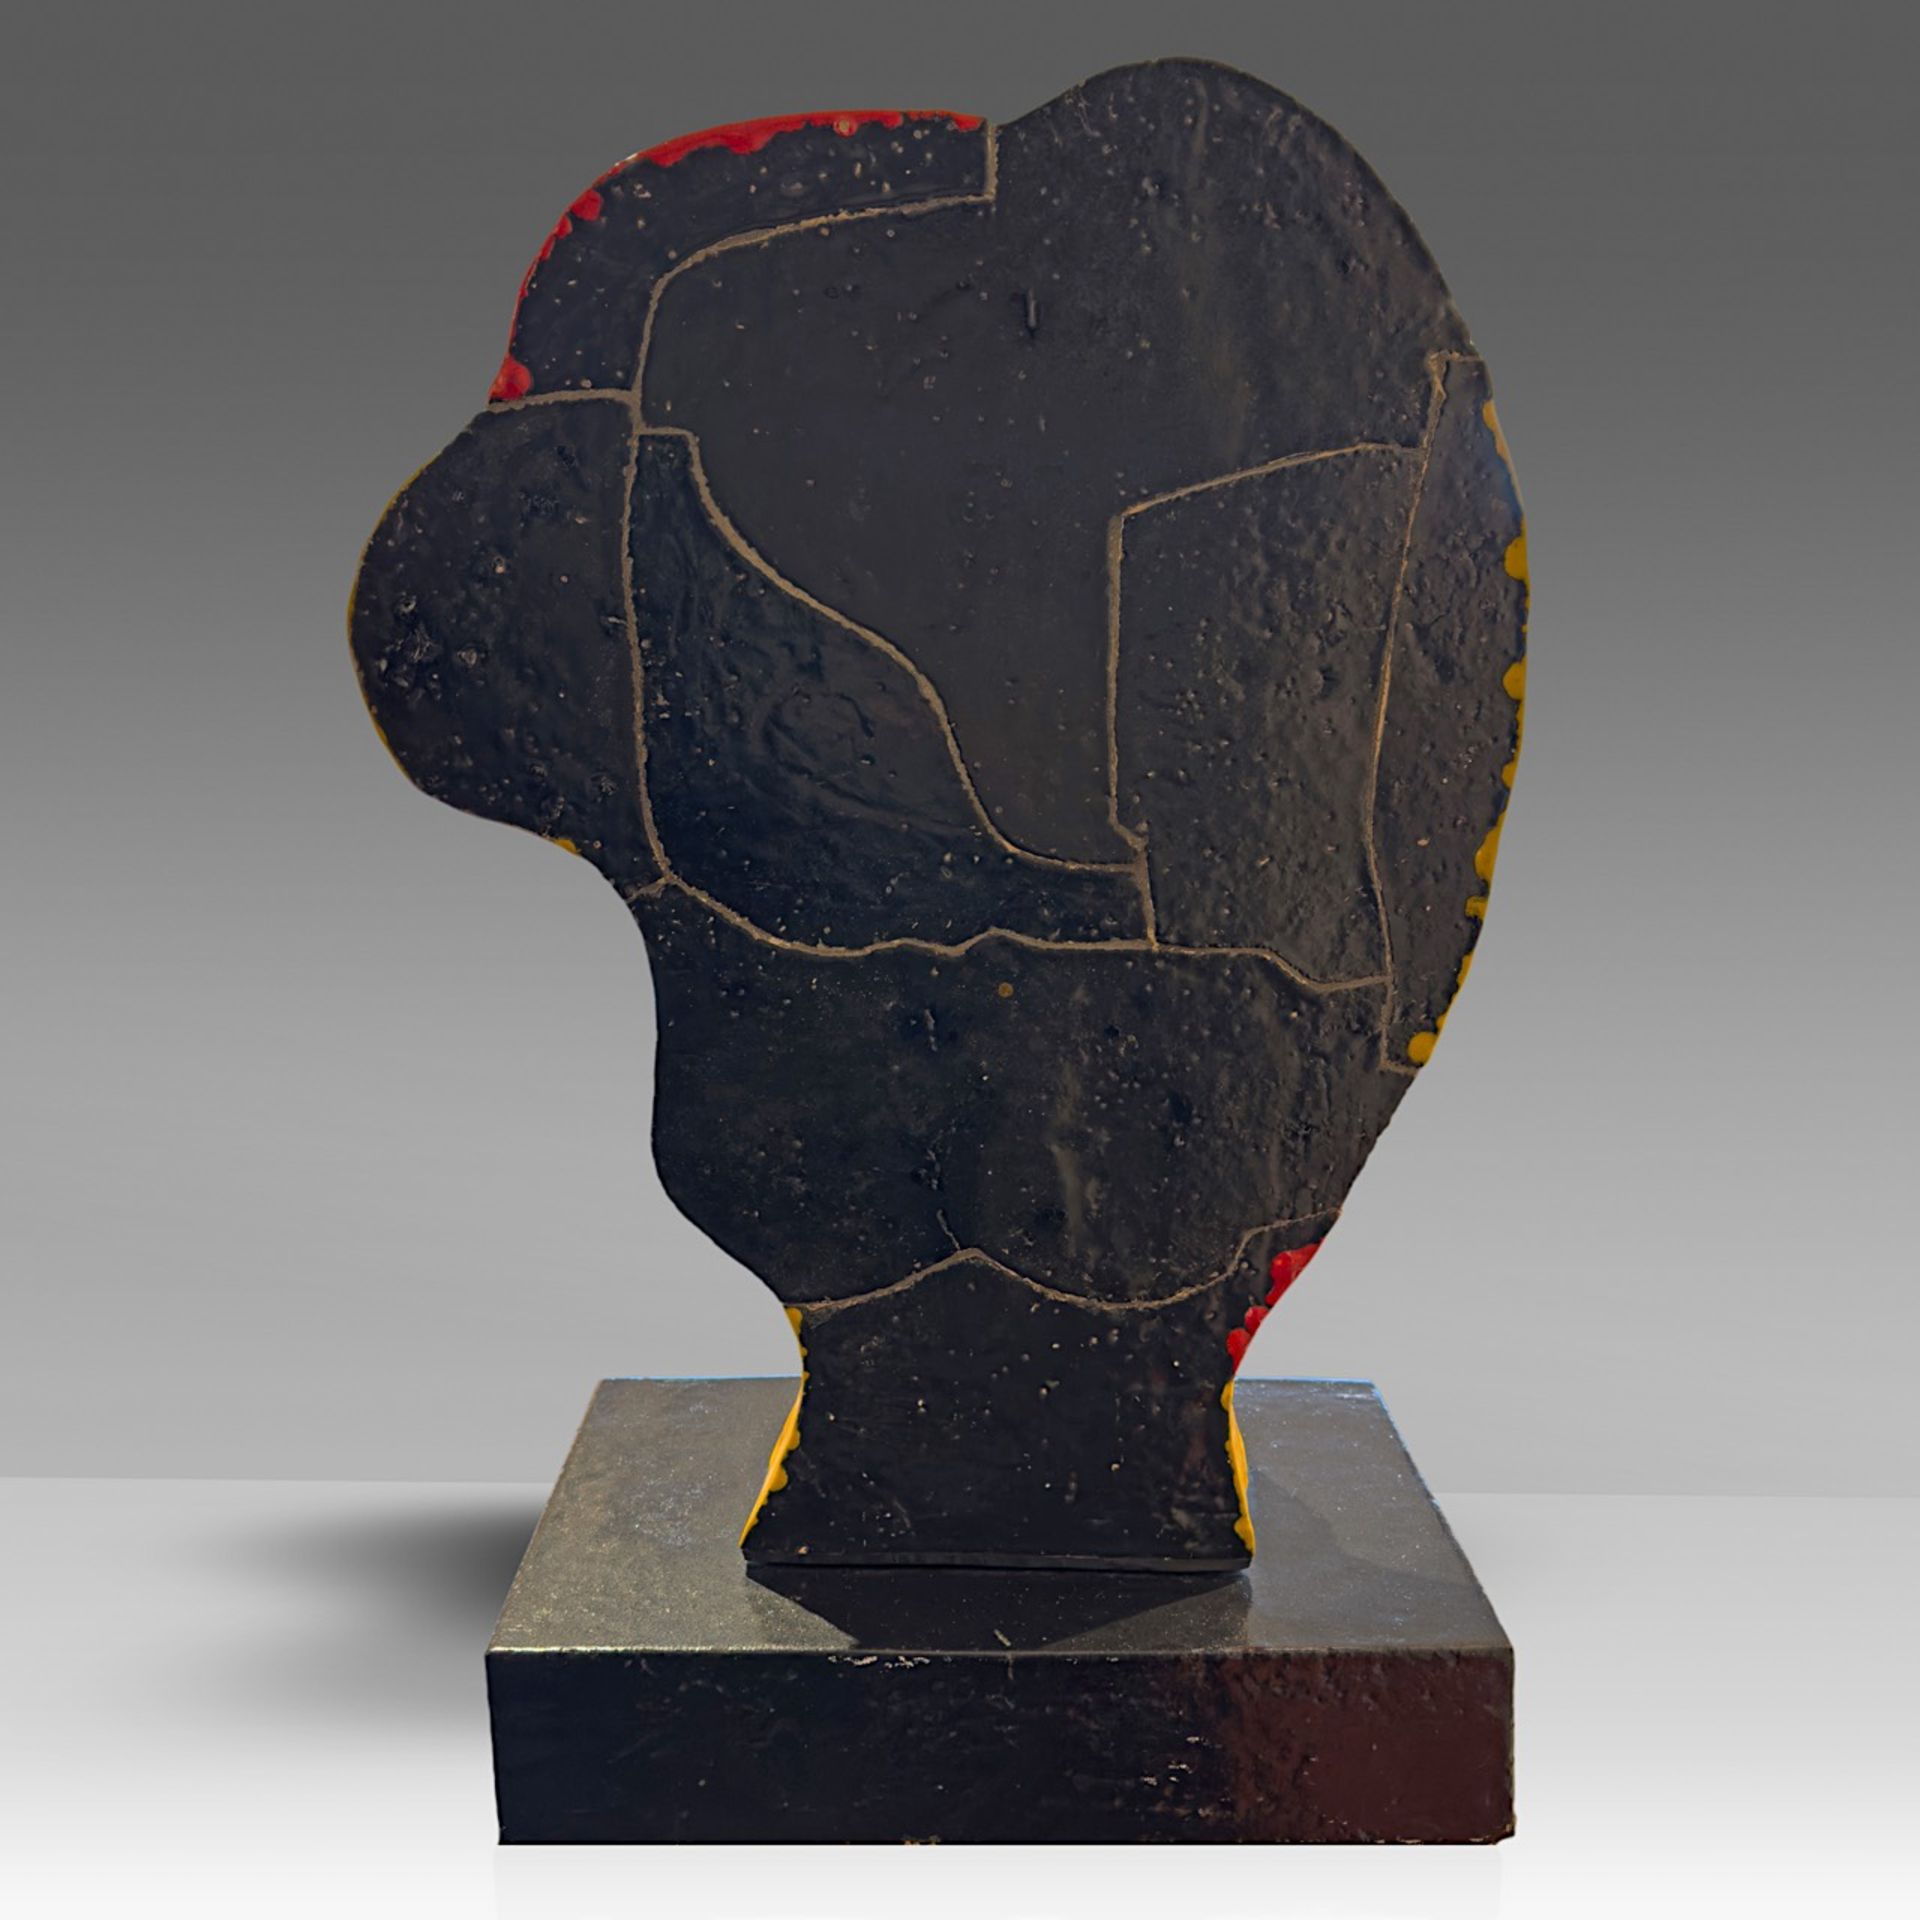 Karel Appel (1921-2006), head, 1975, glazed ceramic, H 81 cm - Image 4 of 5